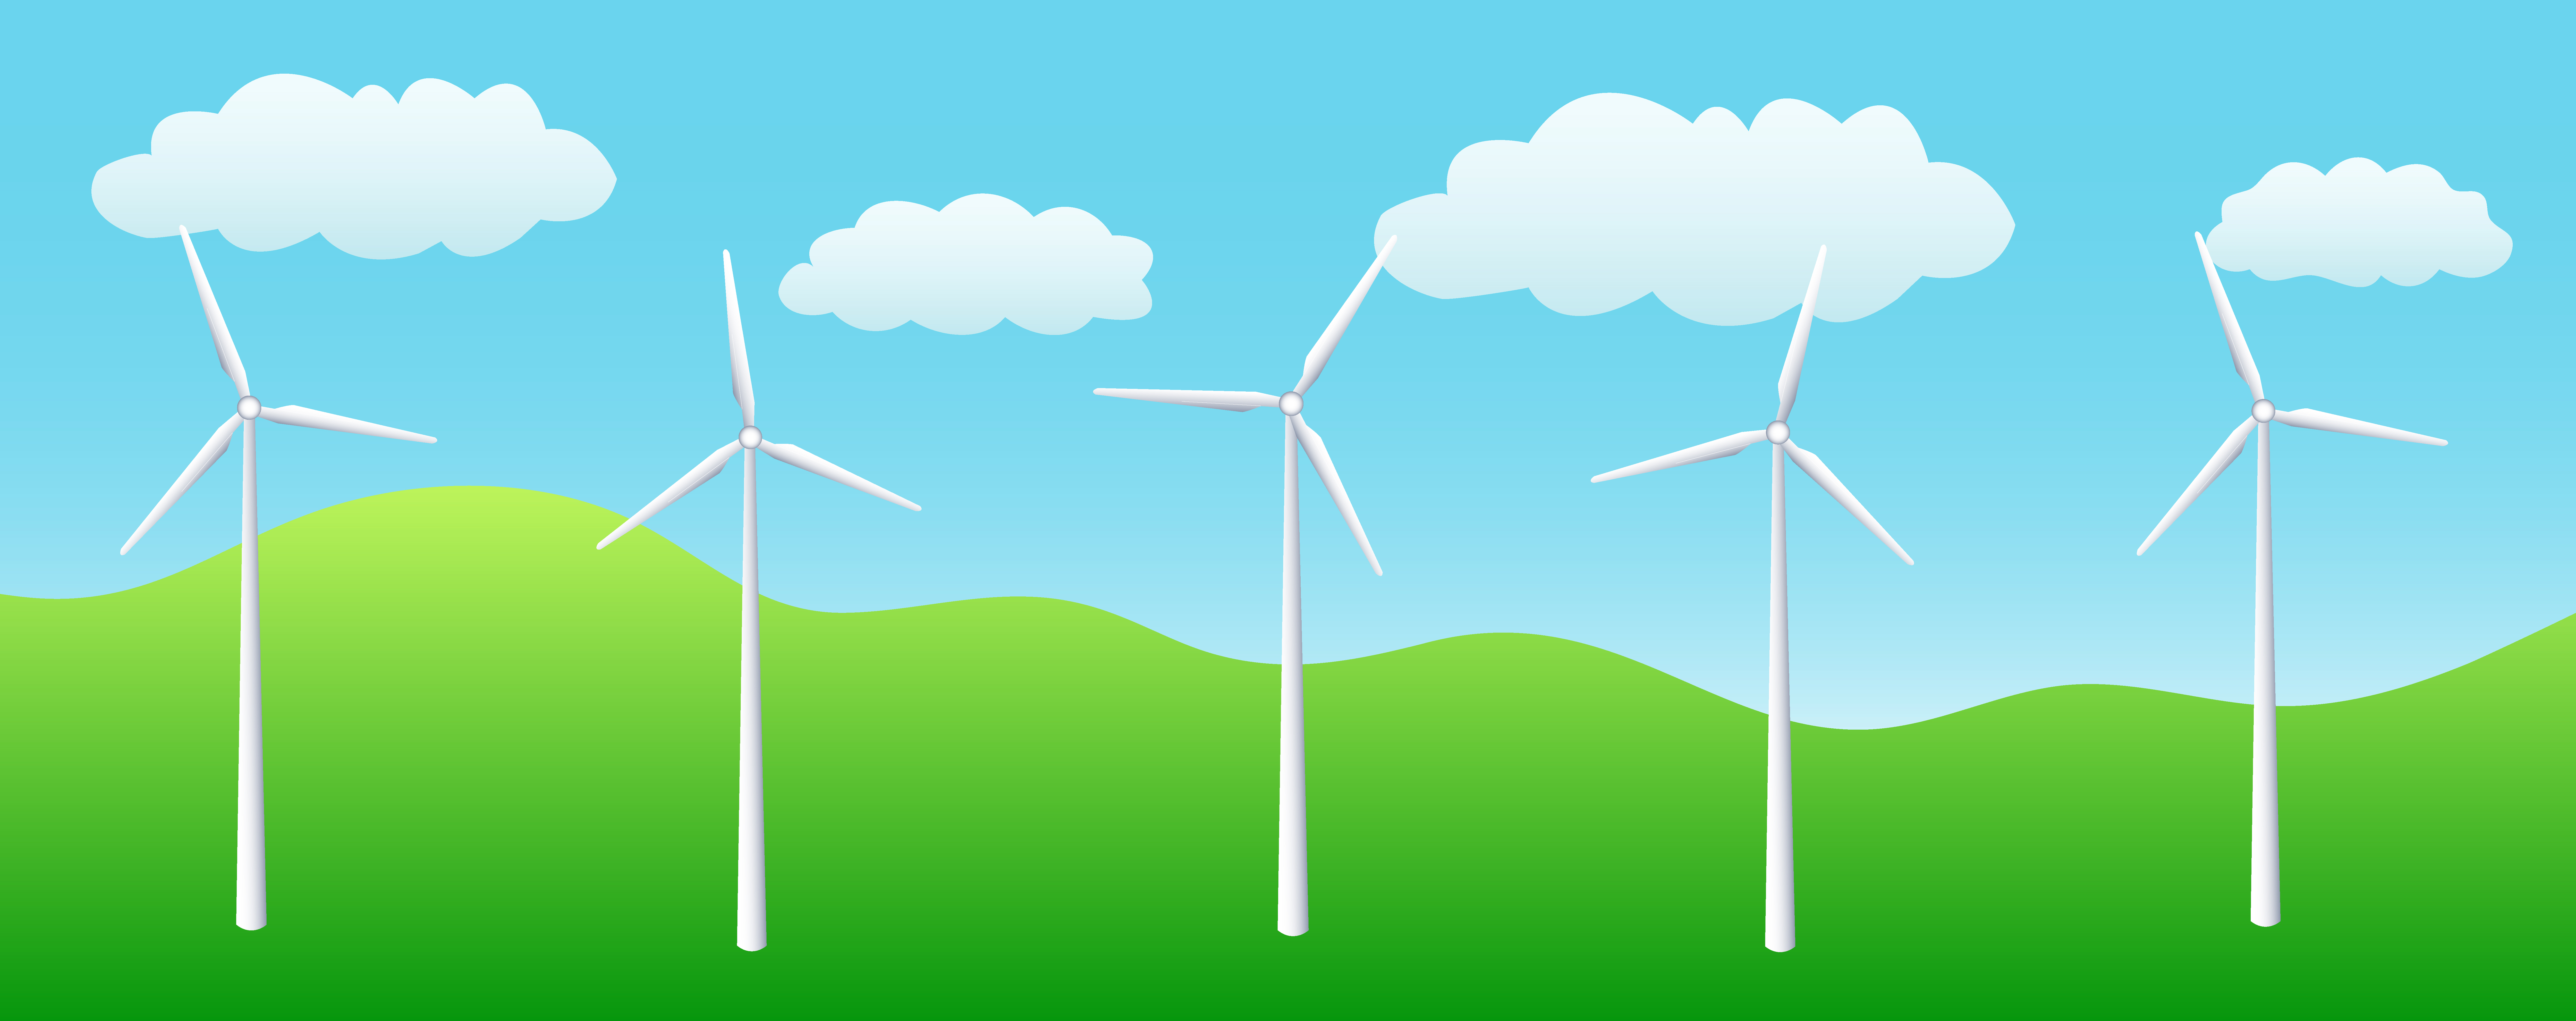 Free Wind Turbine Cliparts, Download Free Clip Art, Free.